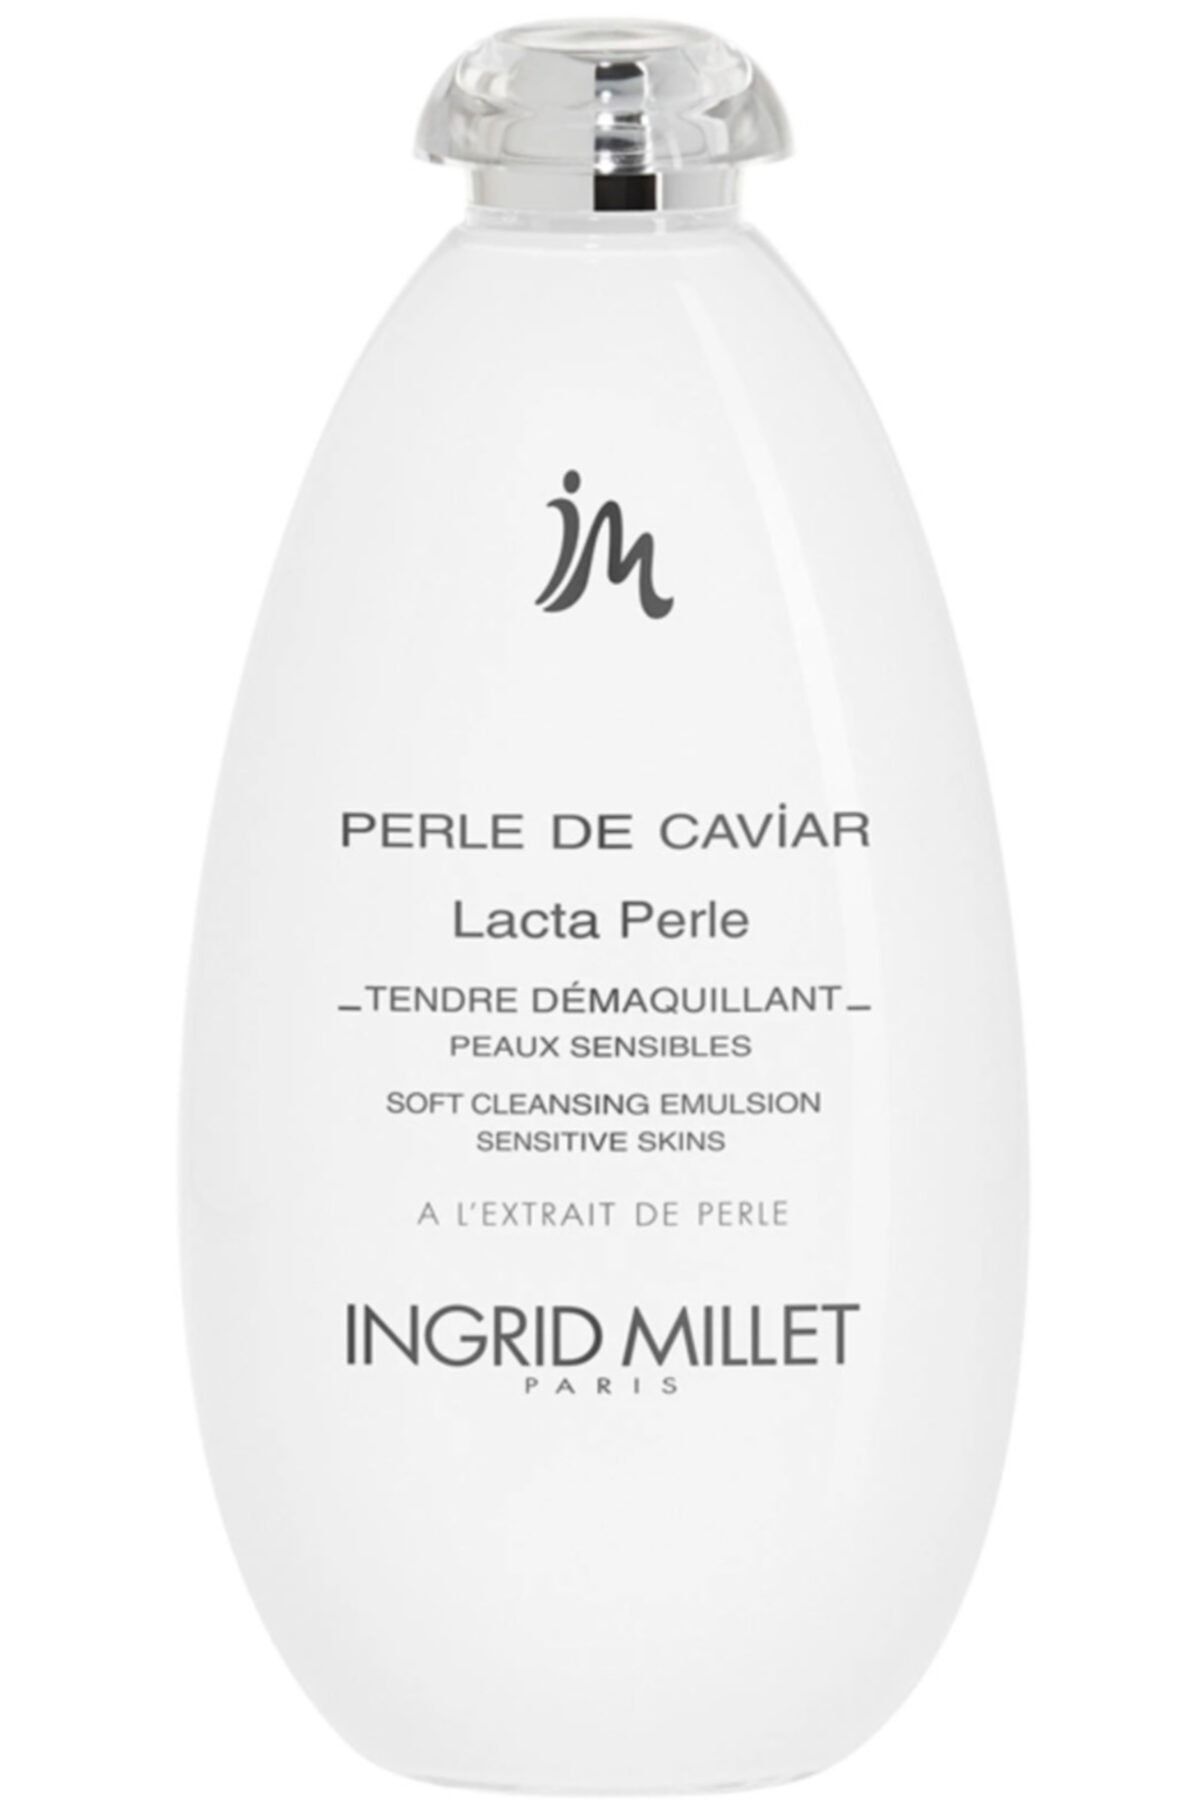 INGRID MILLET Perle De Caviar Lacta Perle Revitalising Cleansing Milk 200 ml